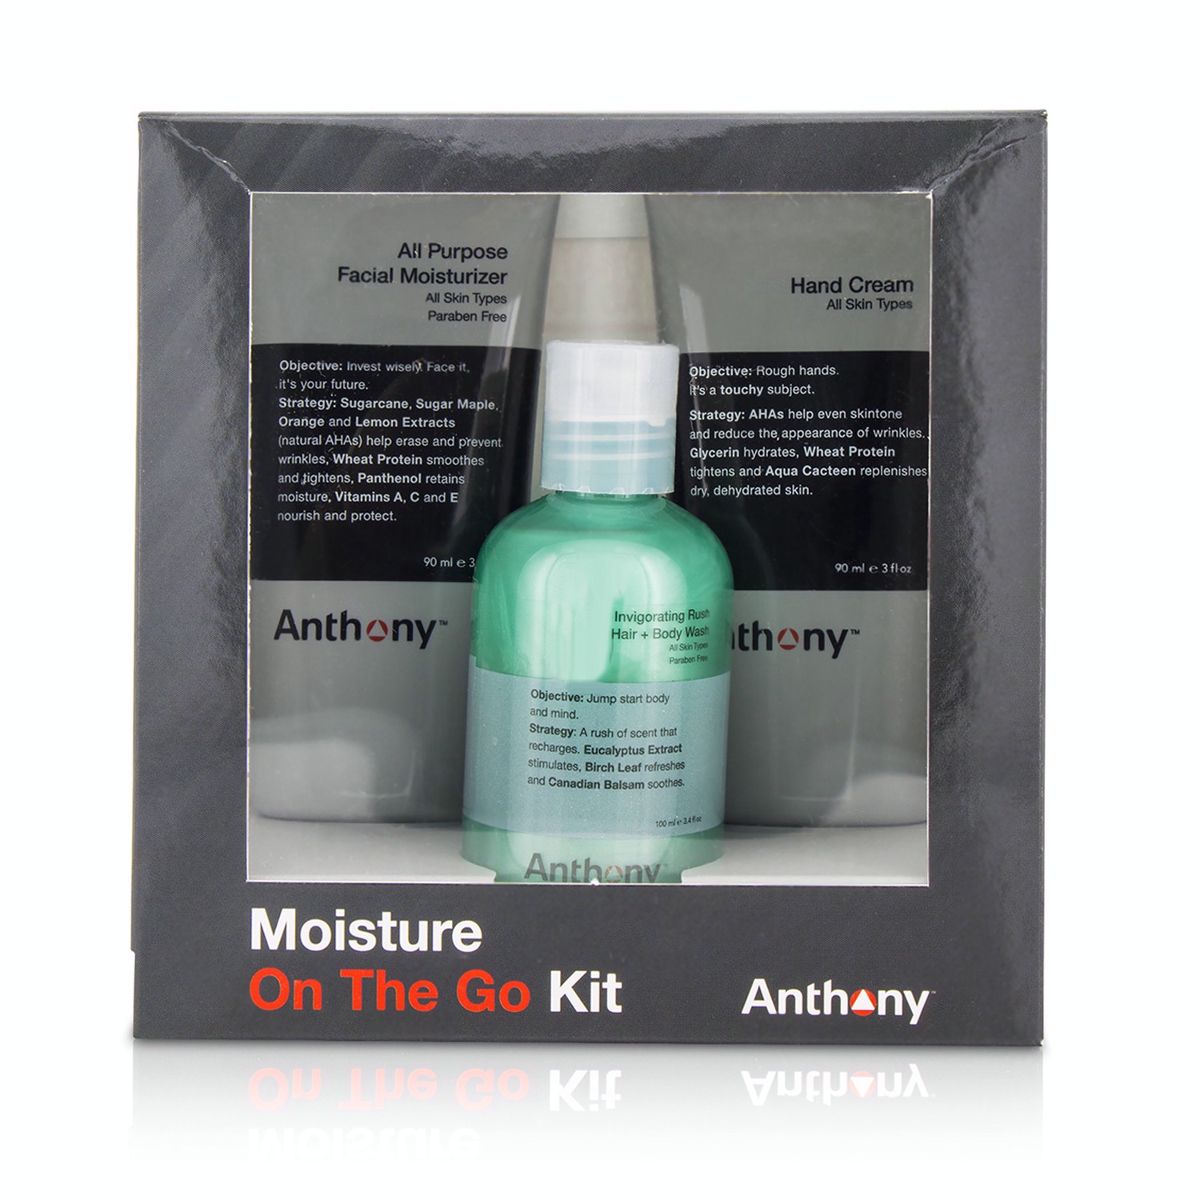 Moisture On The Go Kit: All Purpose Facial Moisturizer 90ml + Invigorating Rush Hair  Body Wash 100ml + Hand Cream 90ml Anthony Image